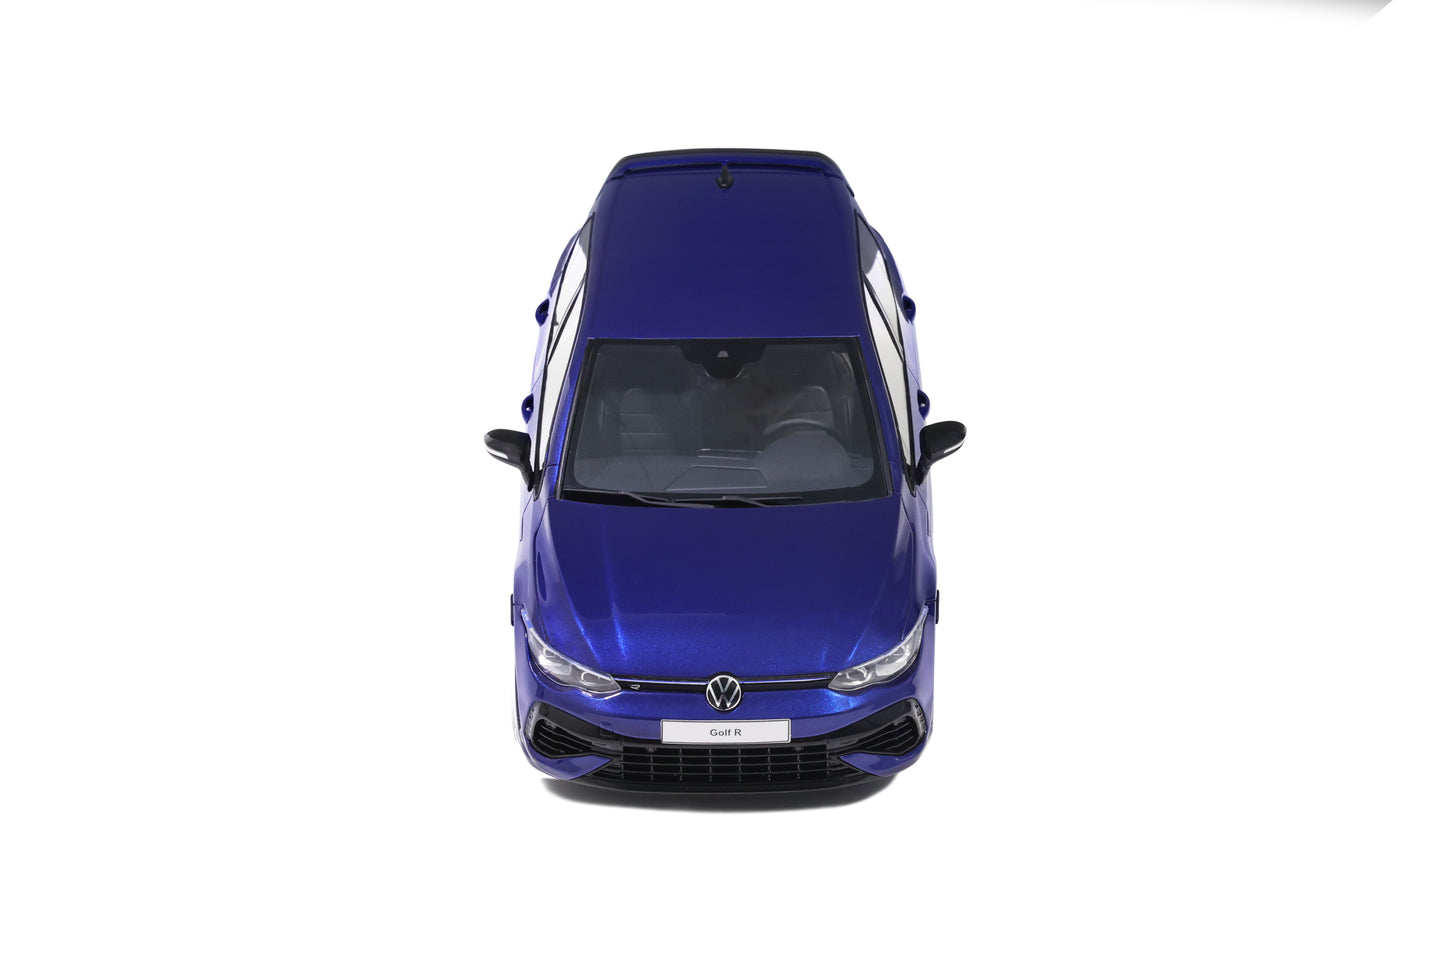 OTTO 1:18 Volkswagen Golf VIII R Blue 2021 OT413